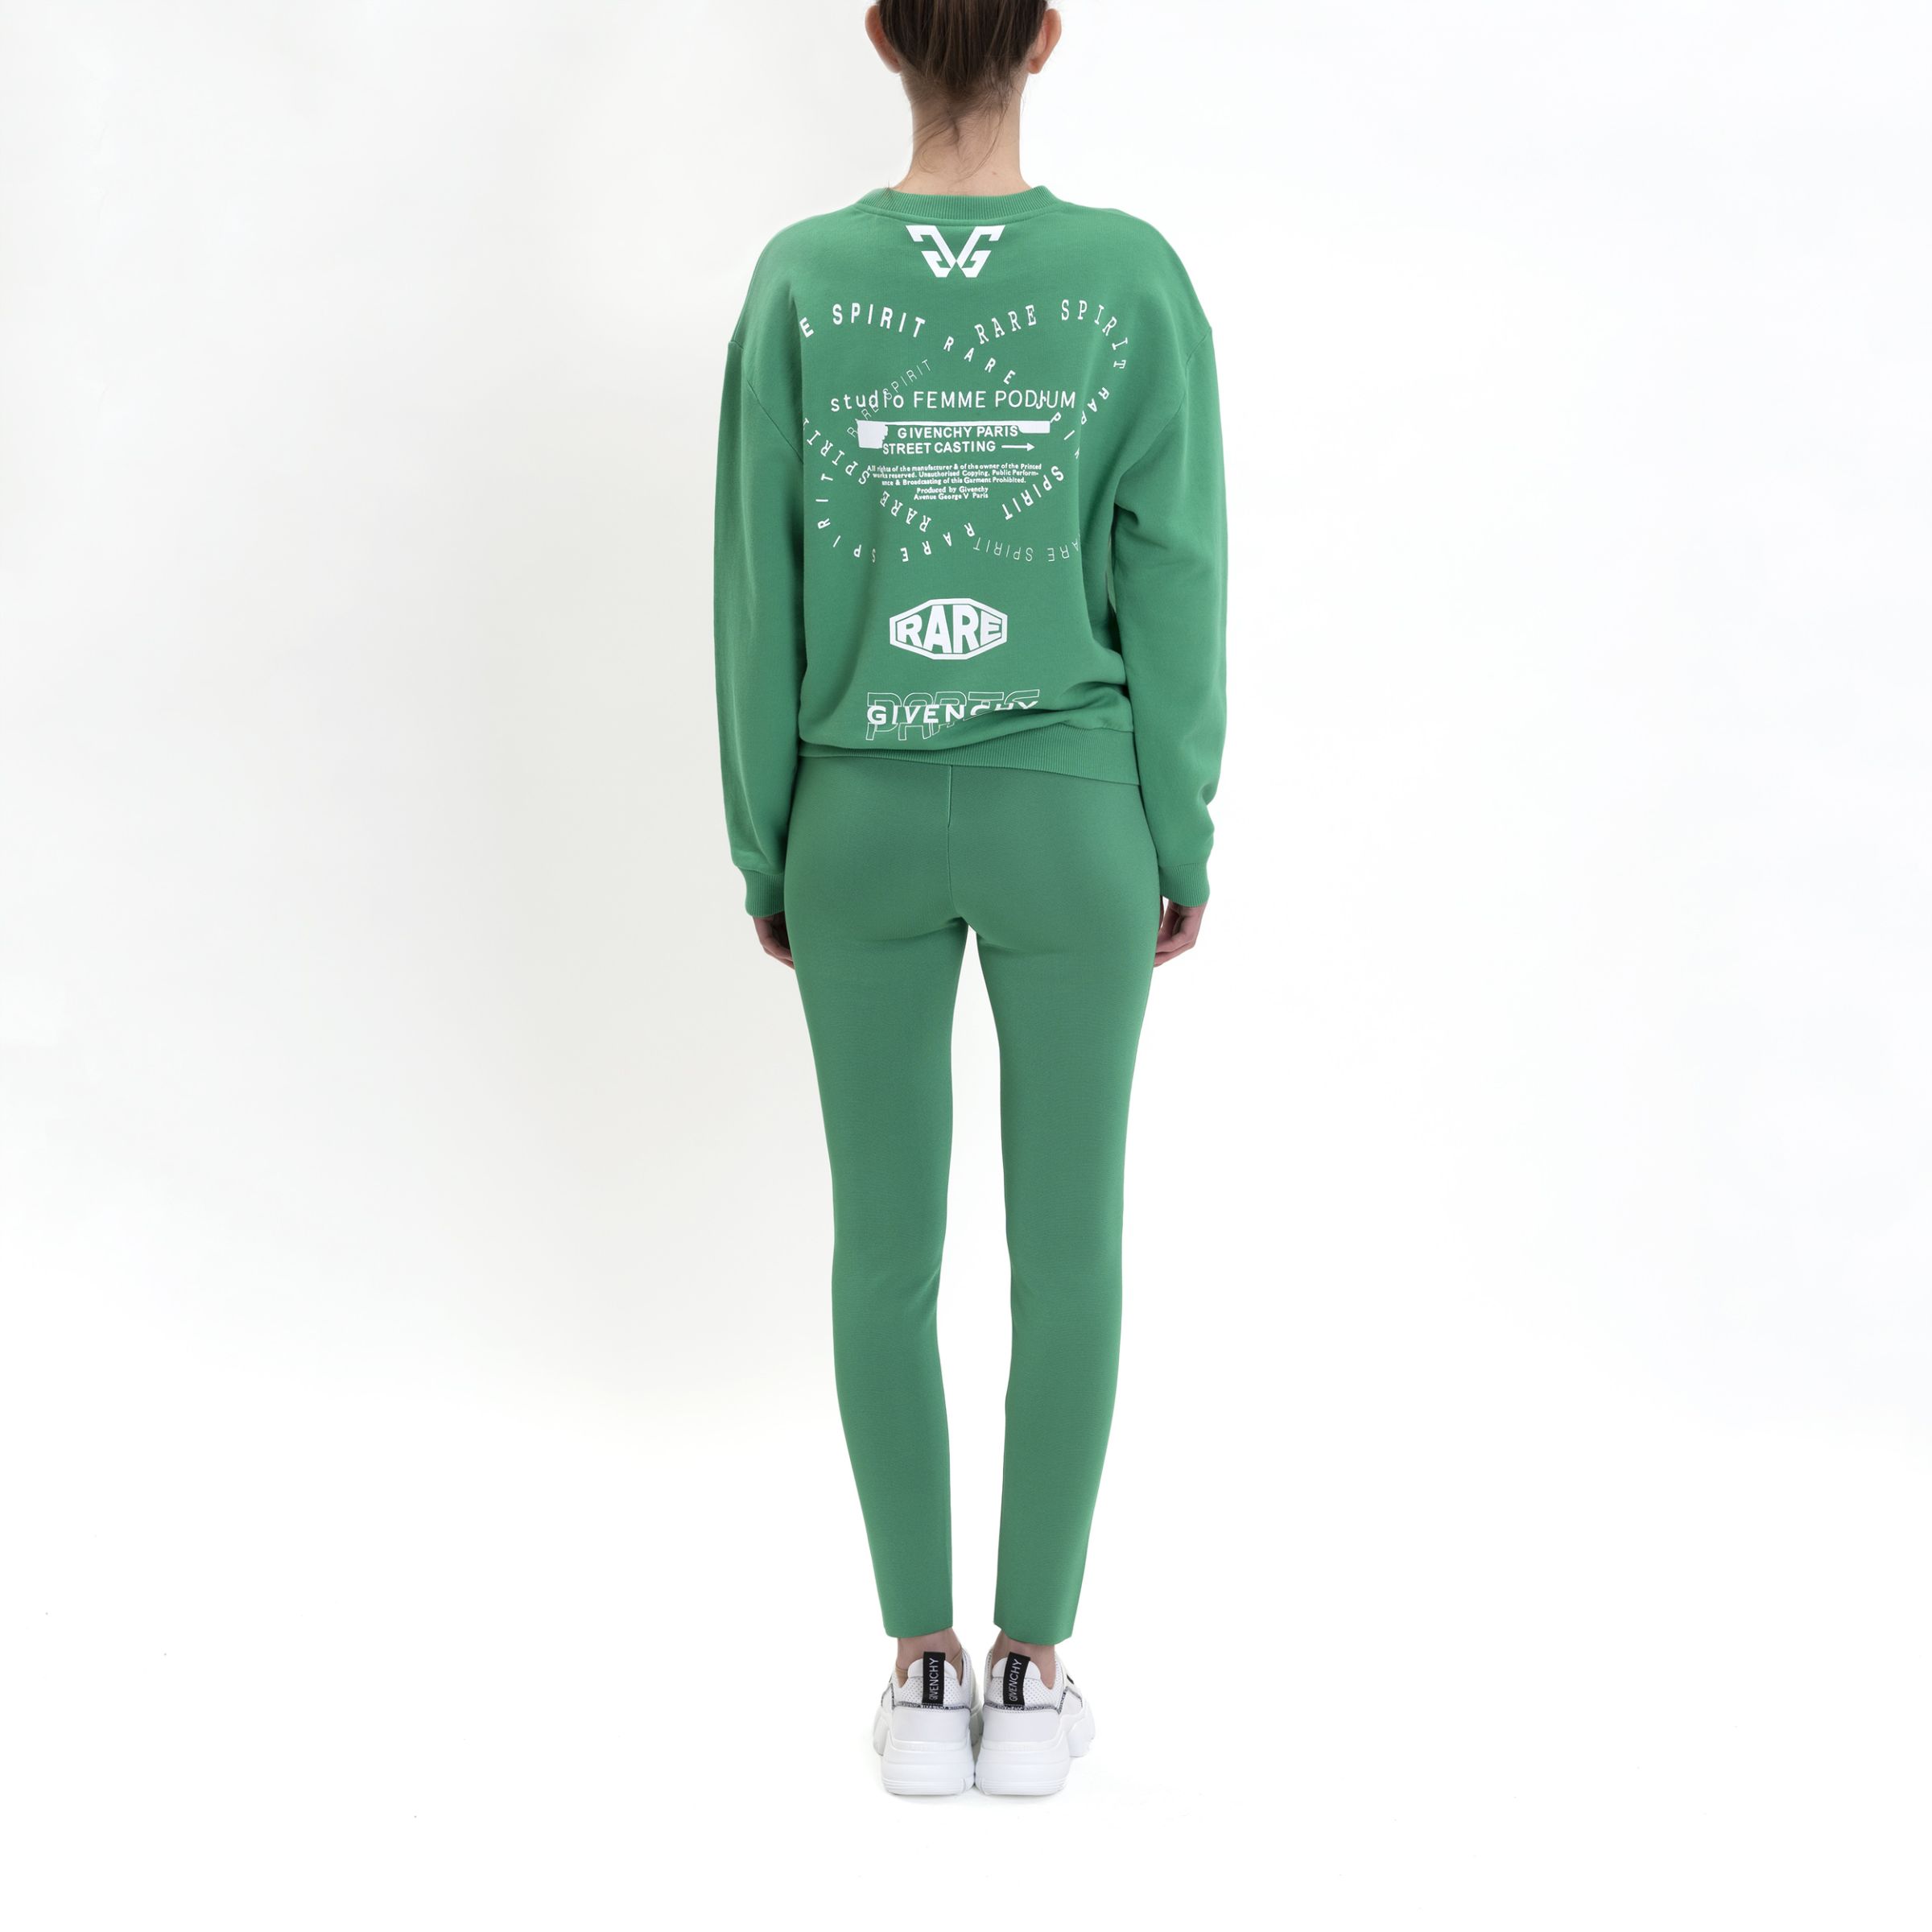 Леггинсы Givenchy зеленые